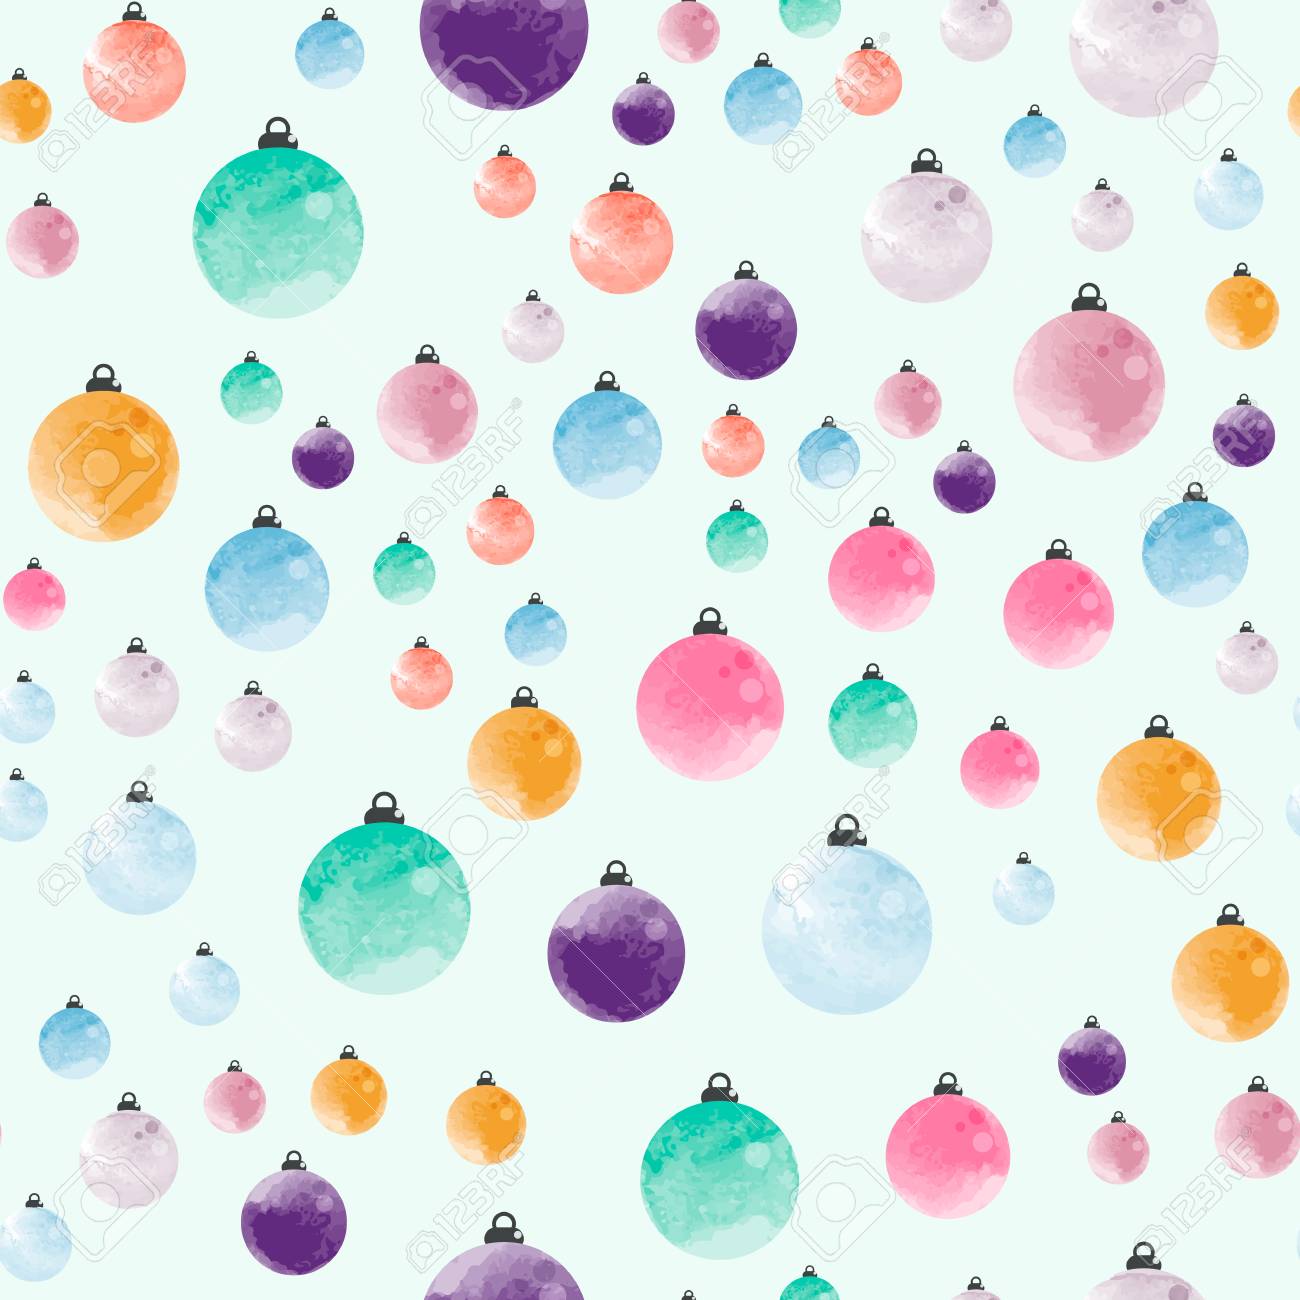 Cute Different Colorful Decorative Watercolor Christmas Balls